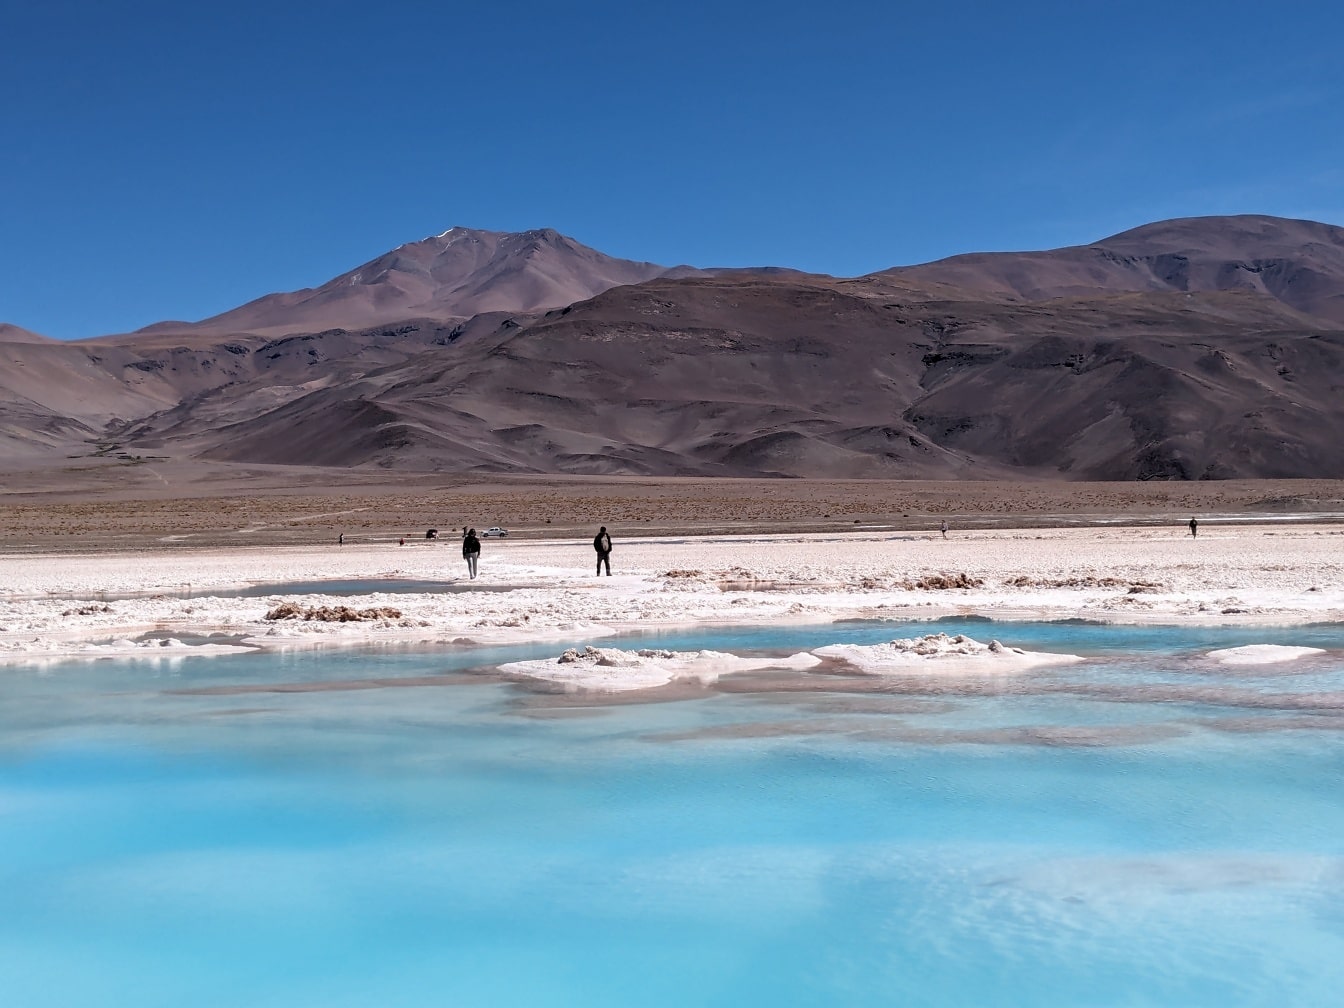 Orang-orang berdiri di atas kristal garam di pantai danau garam dengan air berwarna biru di padang pasir